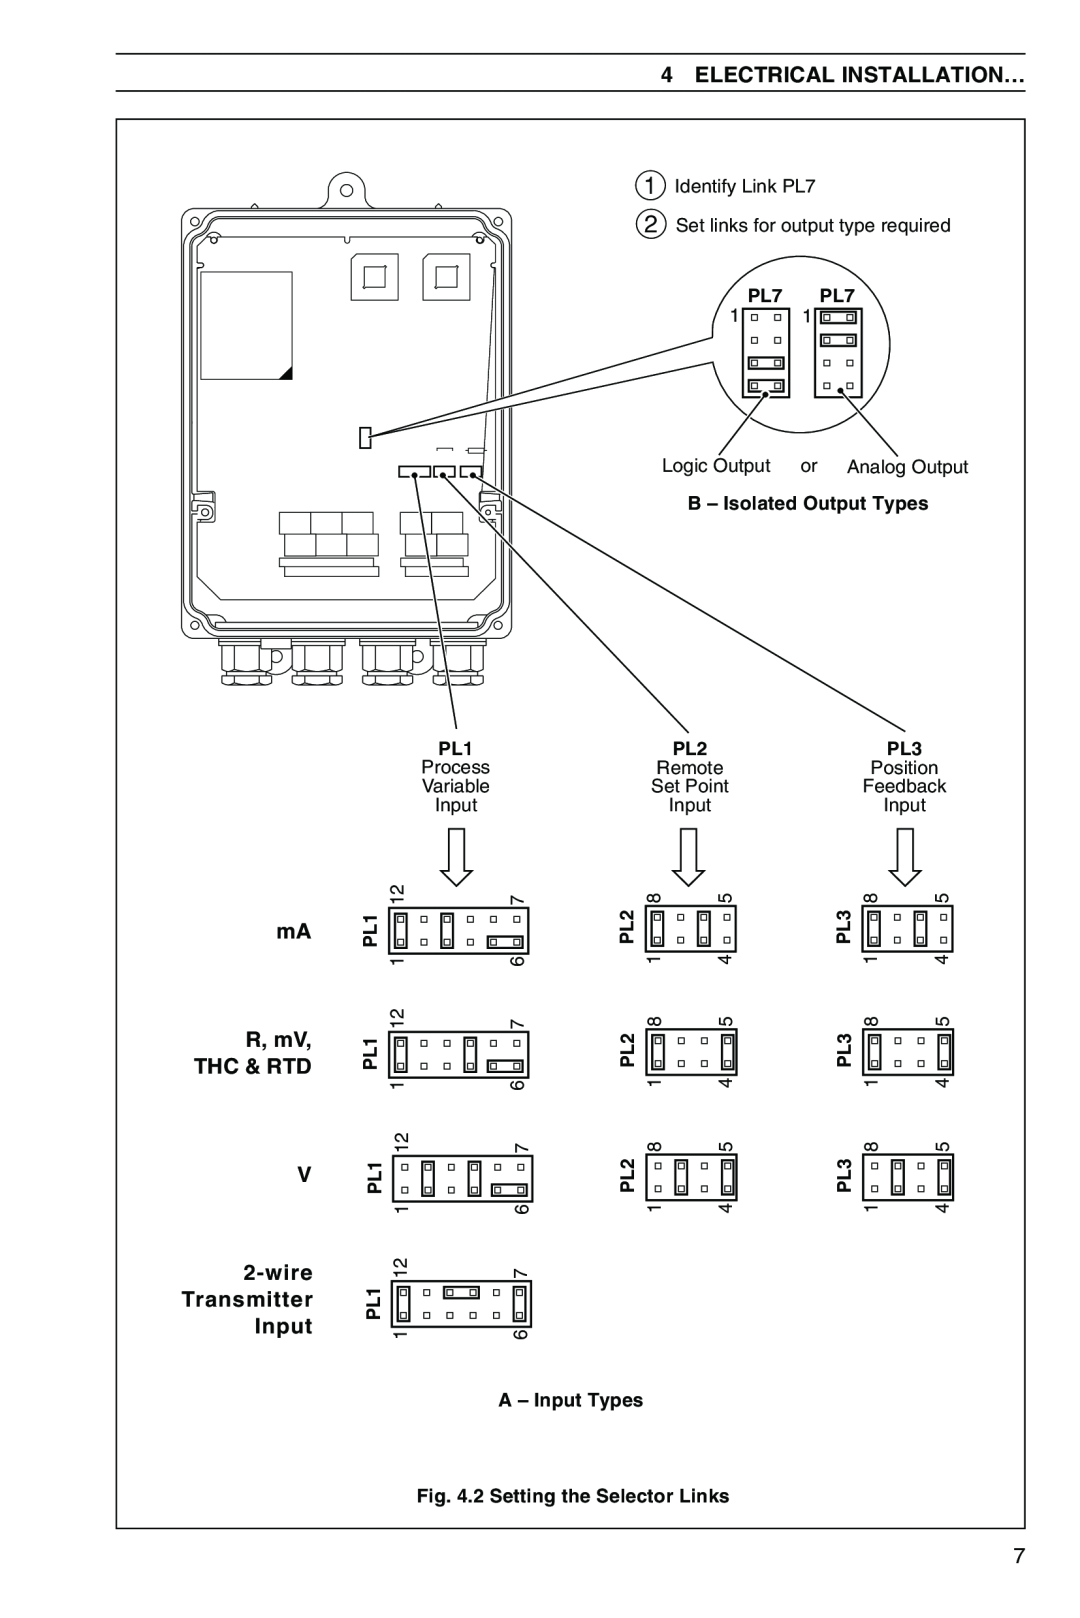 Omega CN3440 manual Electrical Installation…, R, mV, Thc & Rtd, wire, Input, Transmitter 